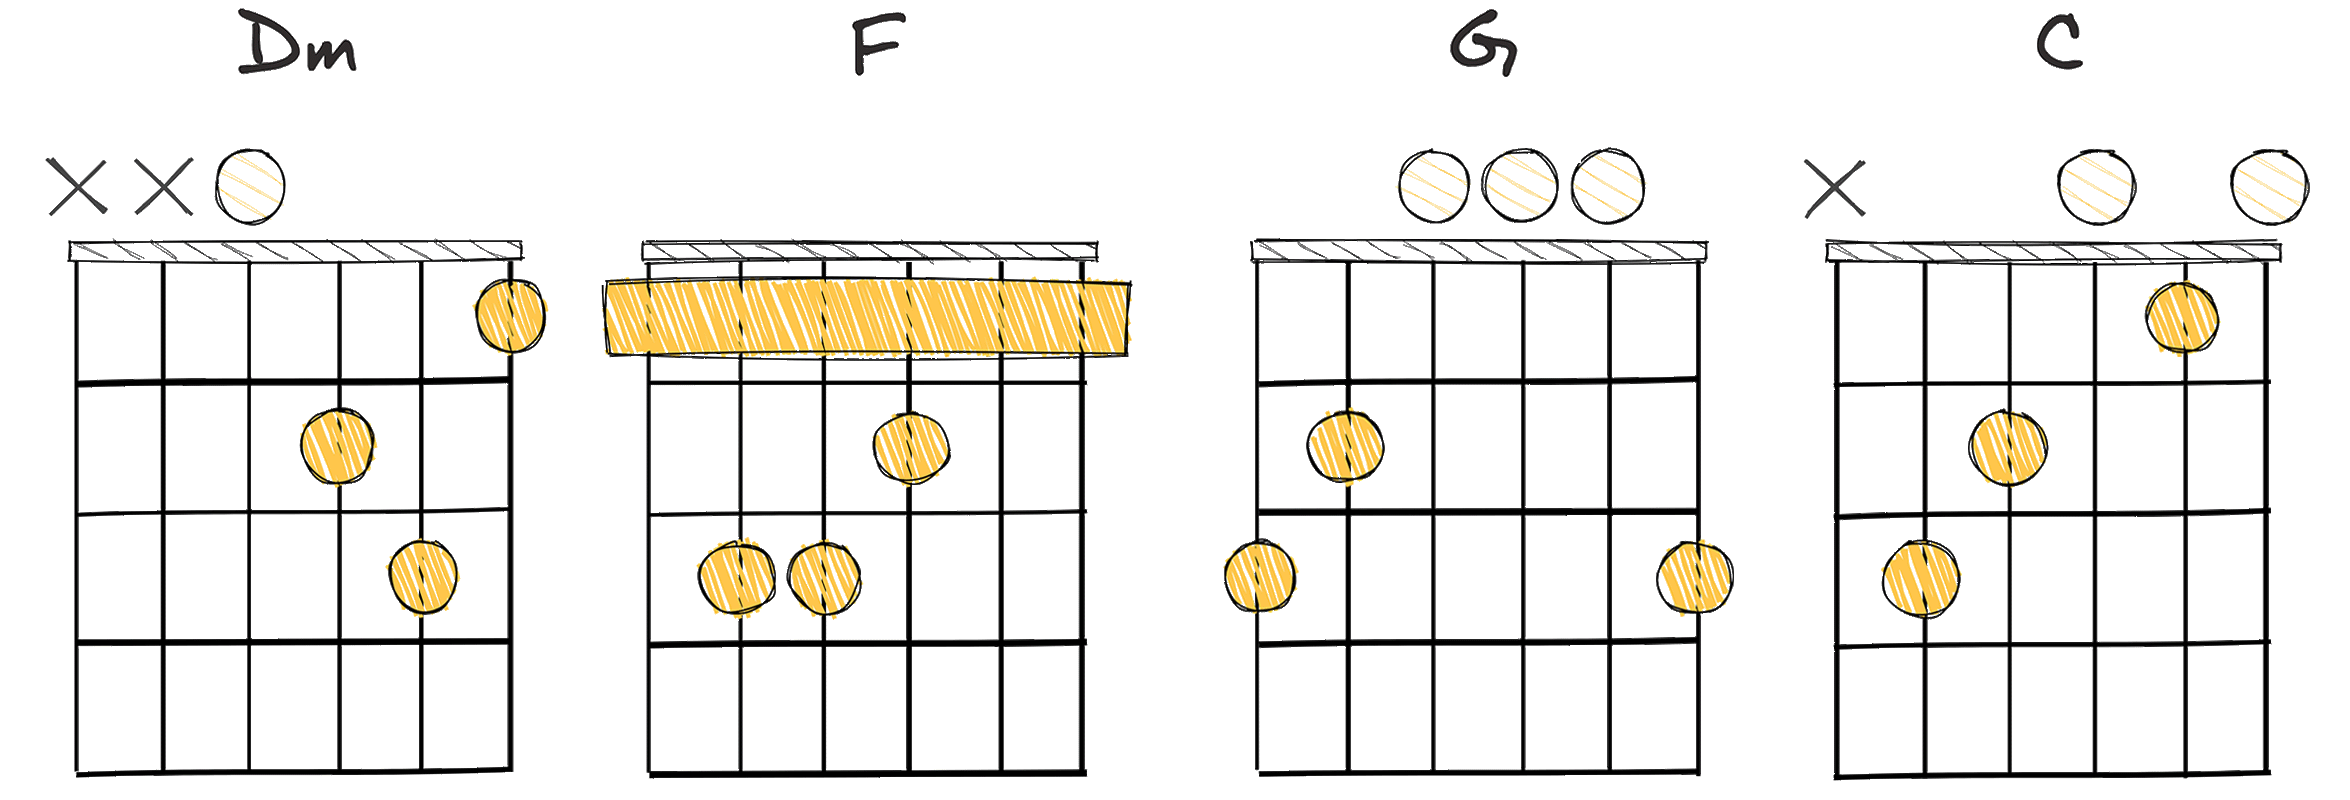 ii - IV - V - I (2-4-5-1) chords diagram